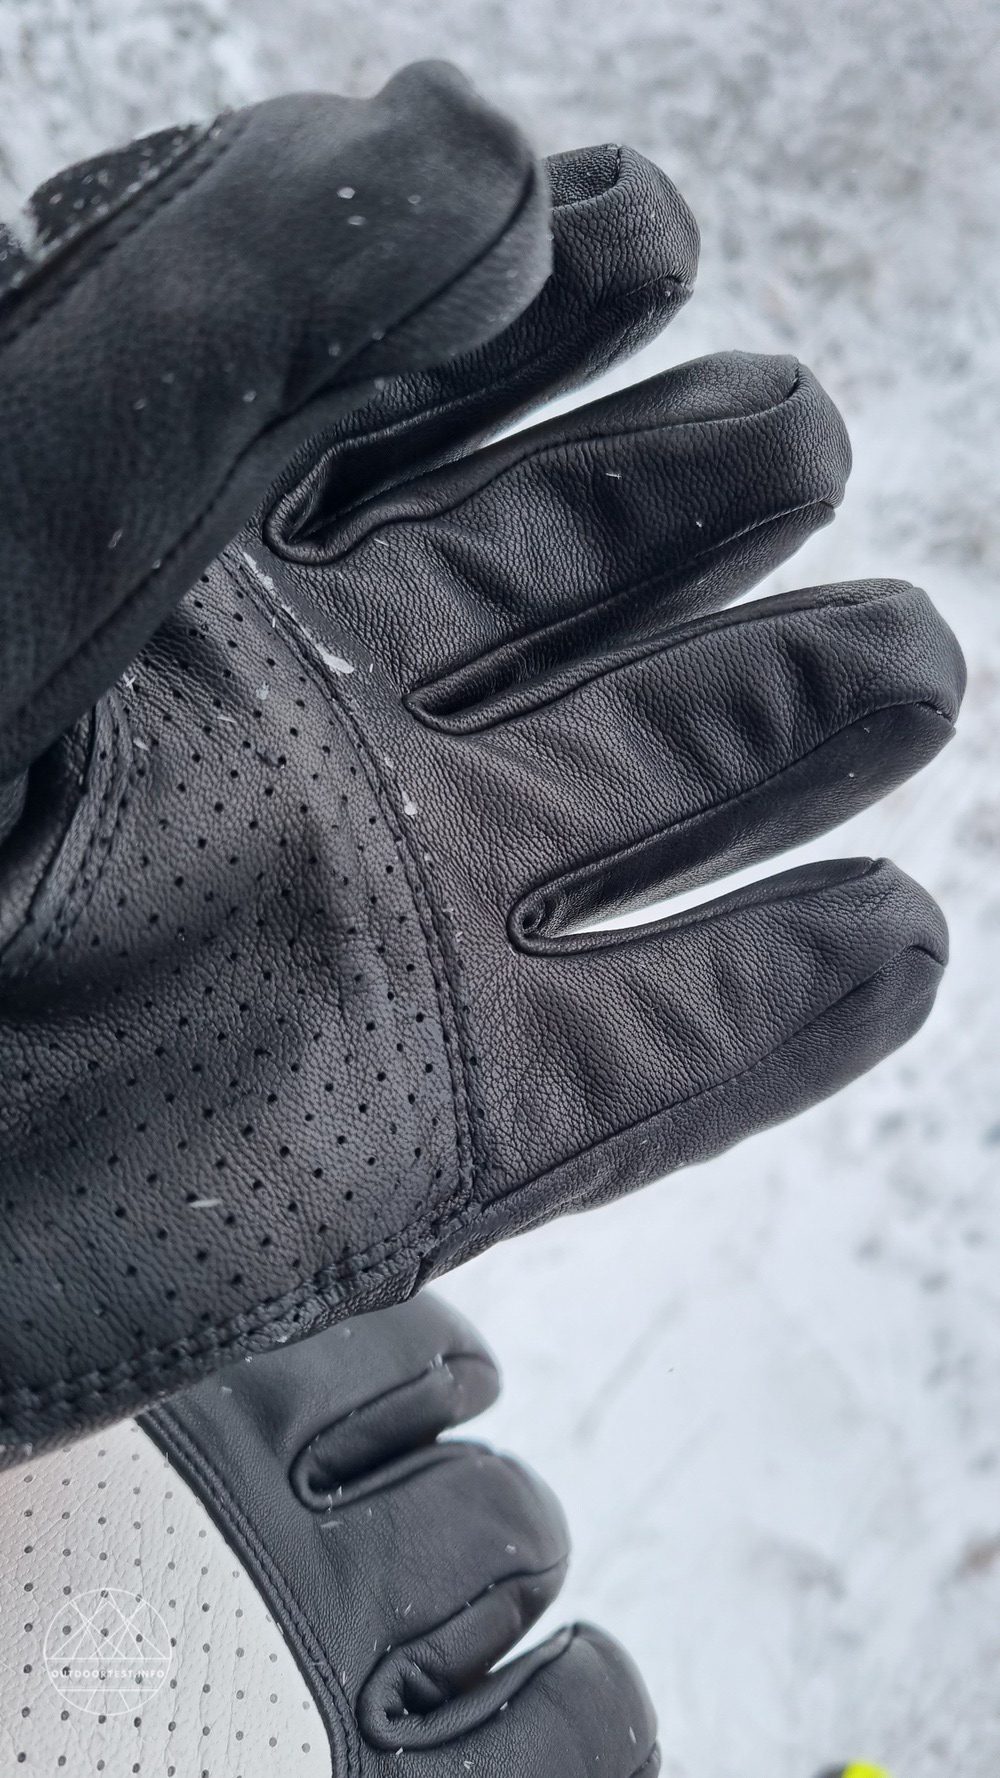 Black Diamond Impulse Gloves